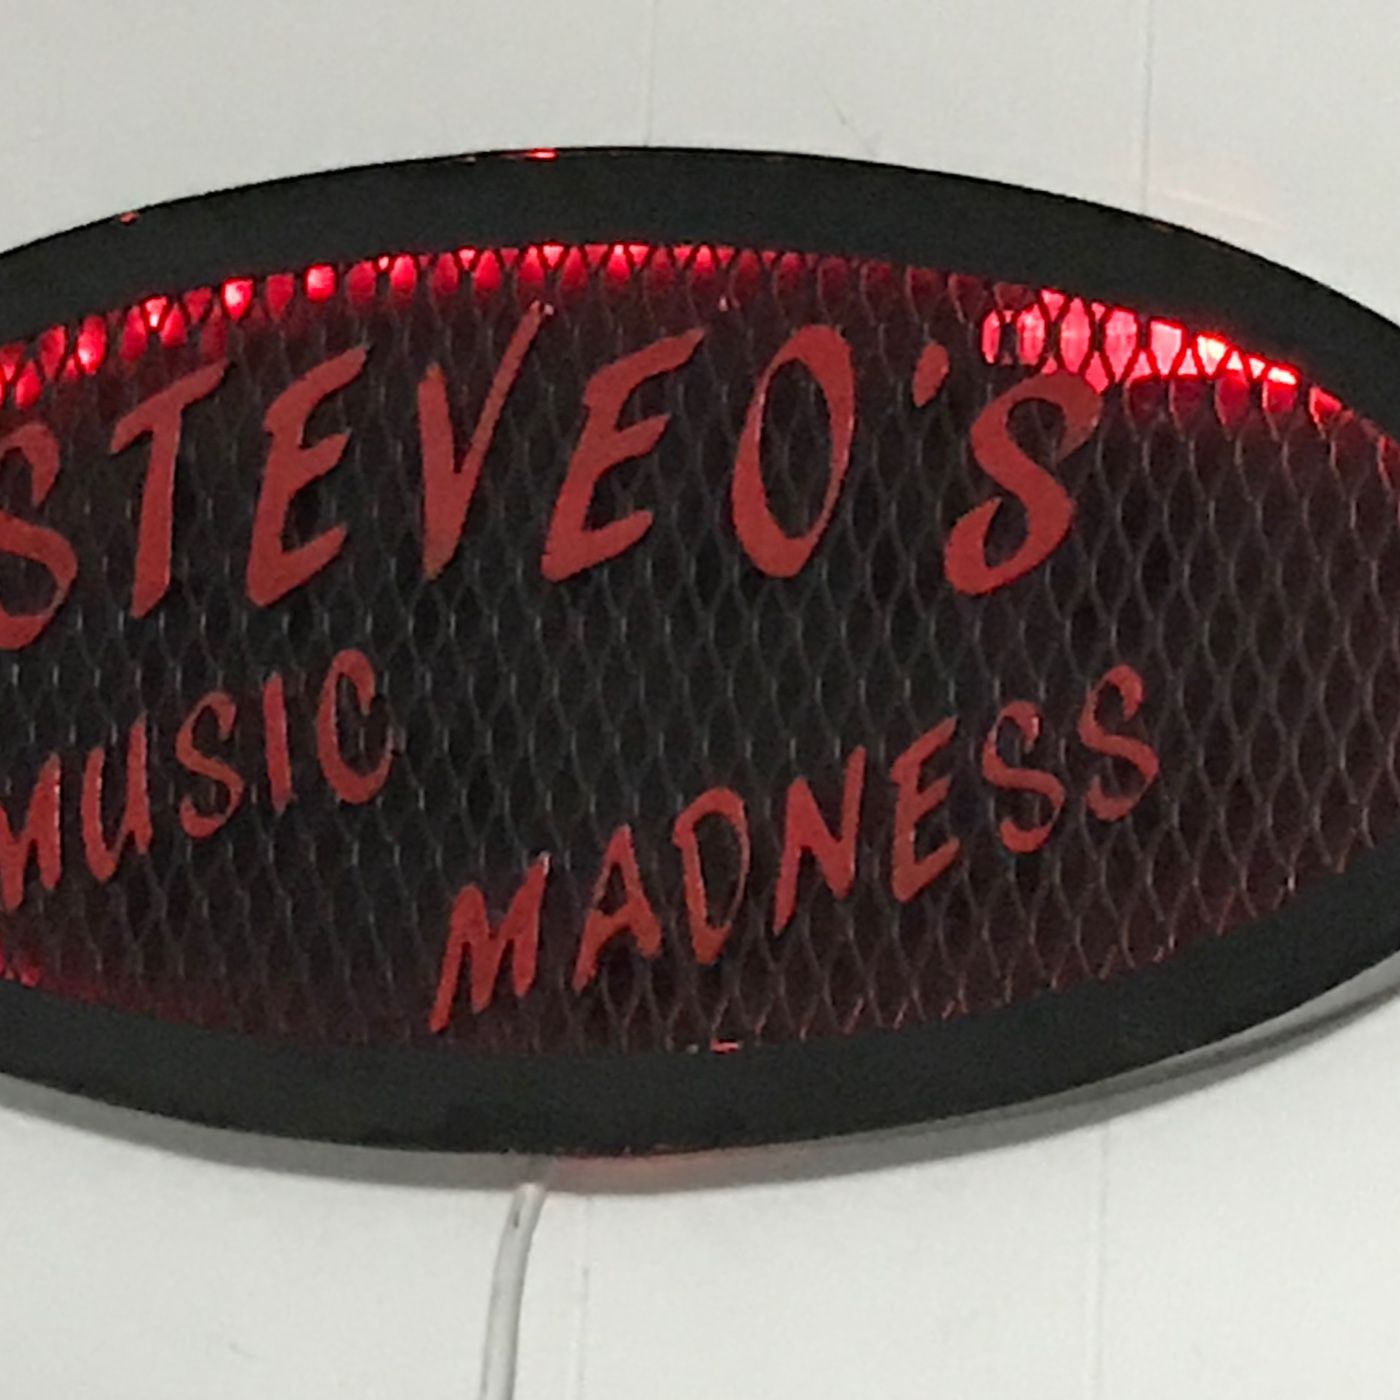 Steve O’s Music Madness 2020